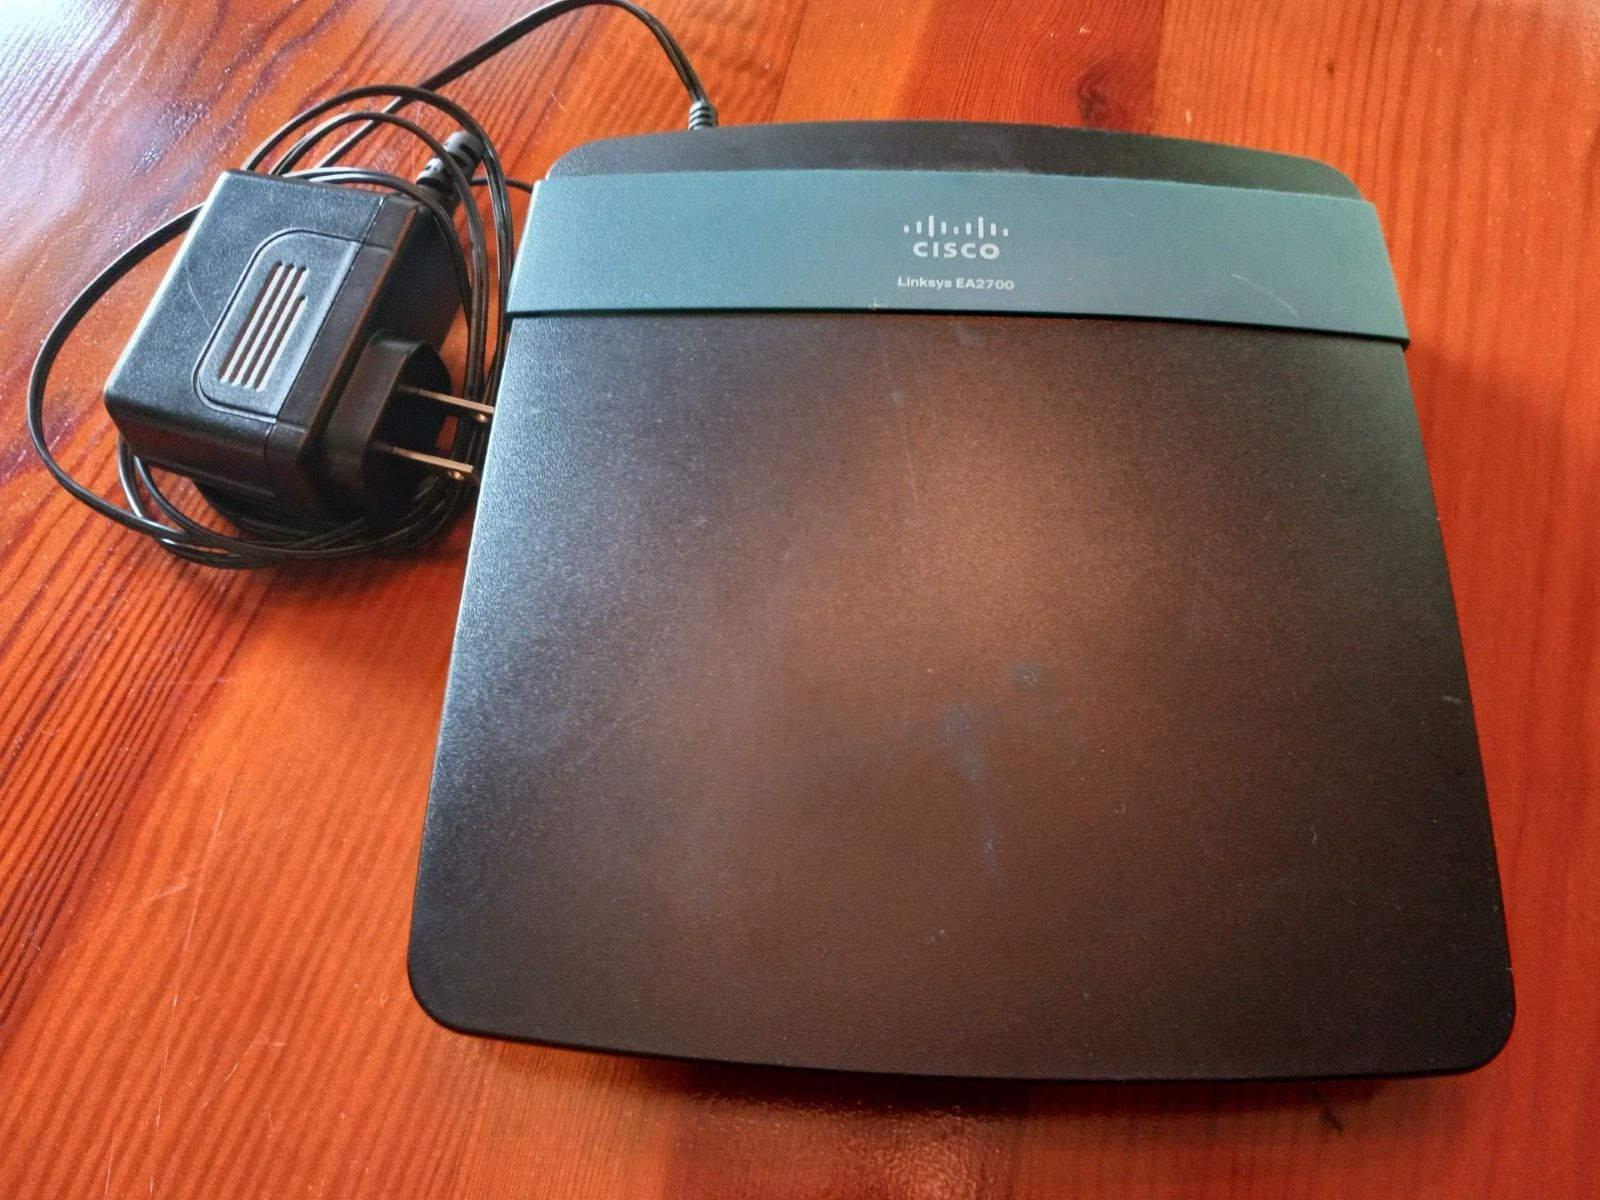 Cisco Linksys EA2700 300 Mbps 4-Port Gigabit Wireless N Router